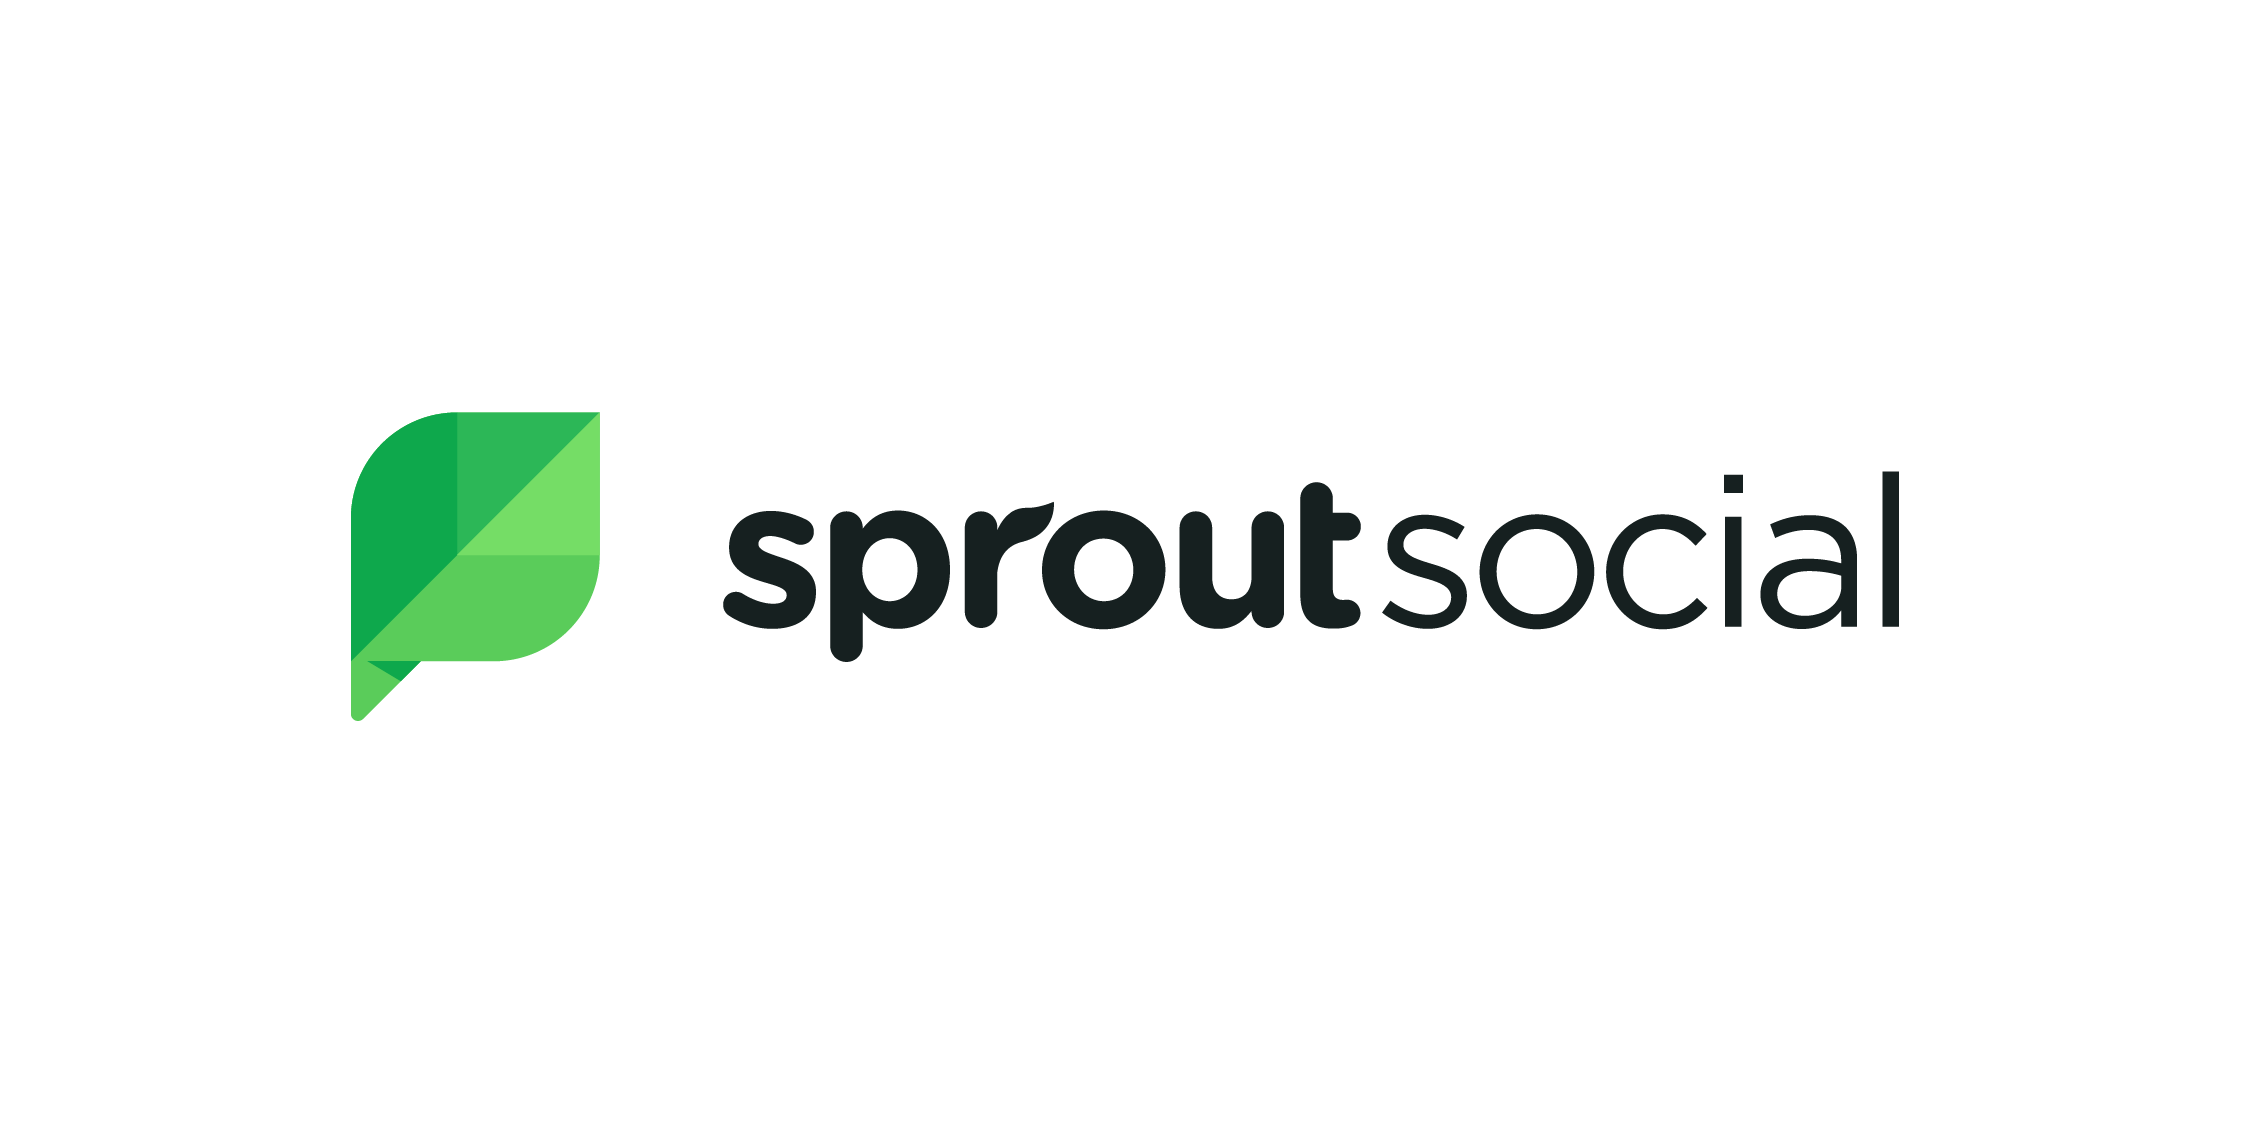 Sprout Social demand generation tools